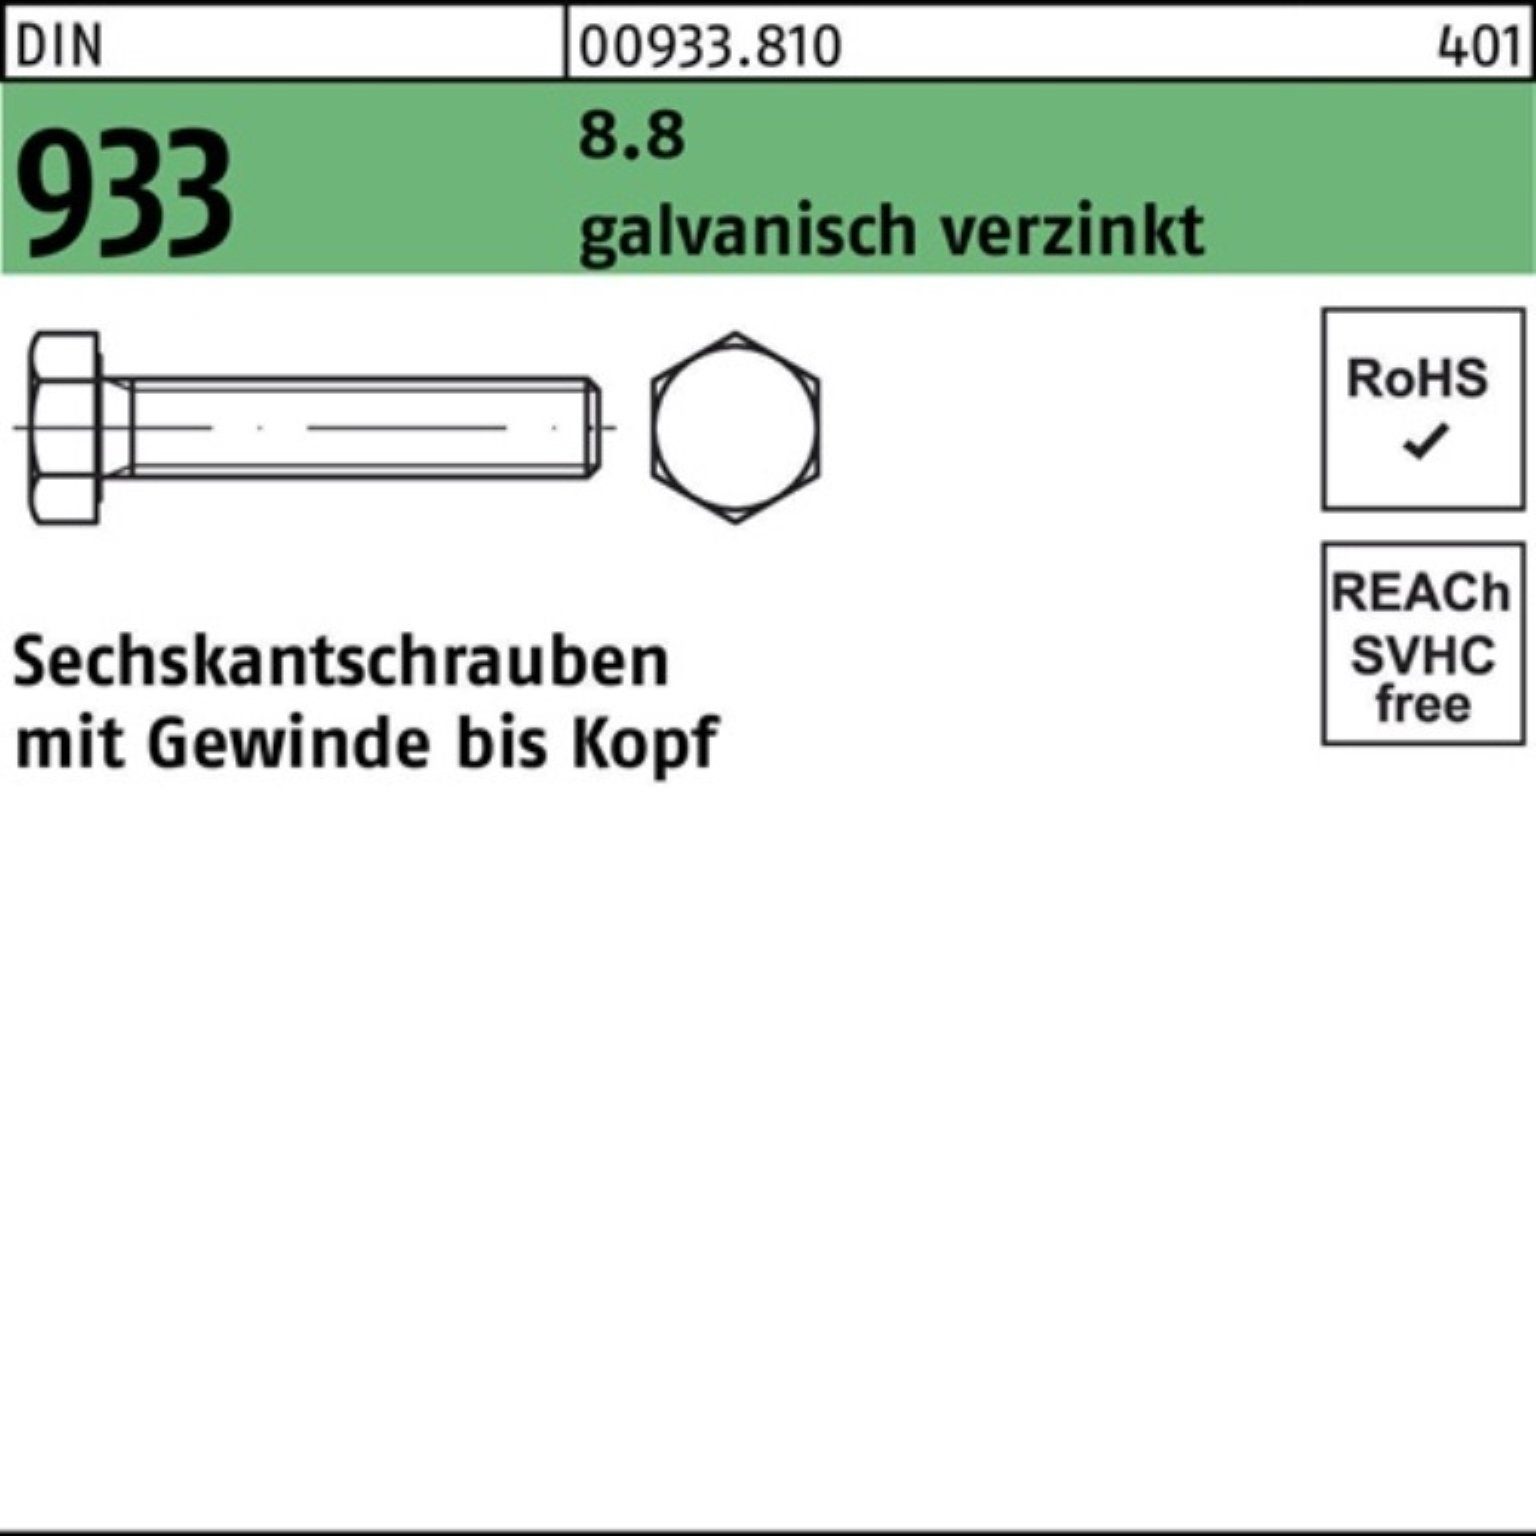 Reyher Sechskantschraube 100er M14x Stü 933 50 Sechskantschraube 75 DIN 8.8 galv.verz. Pack VG